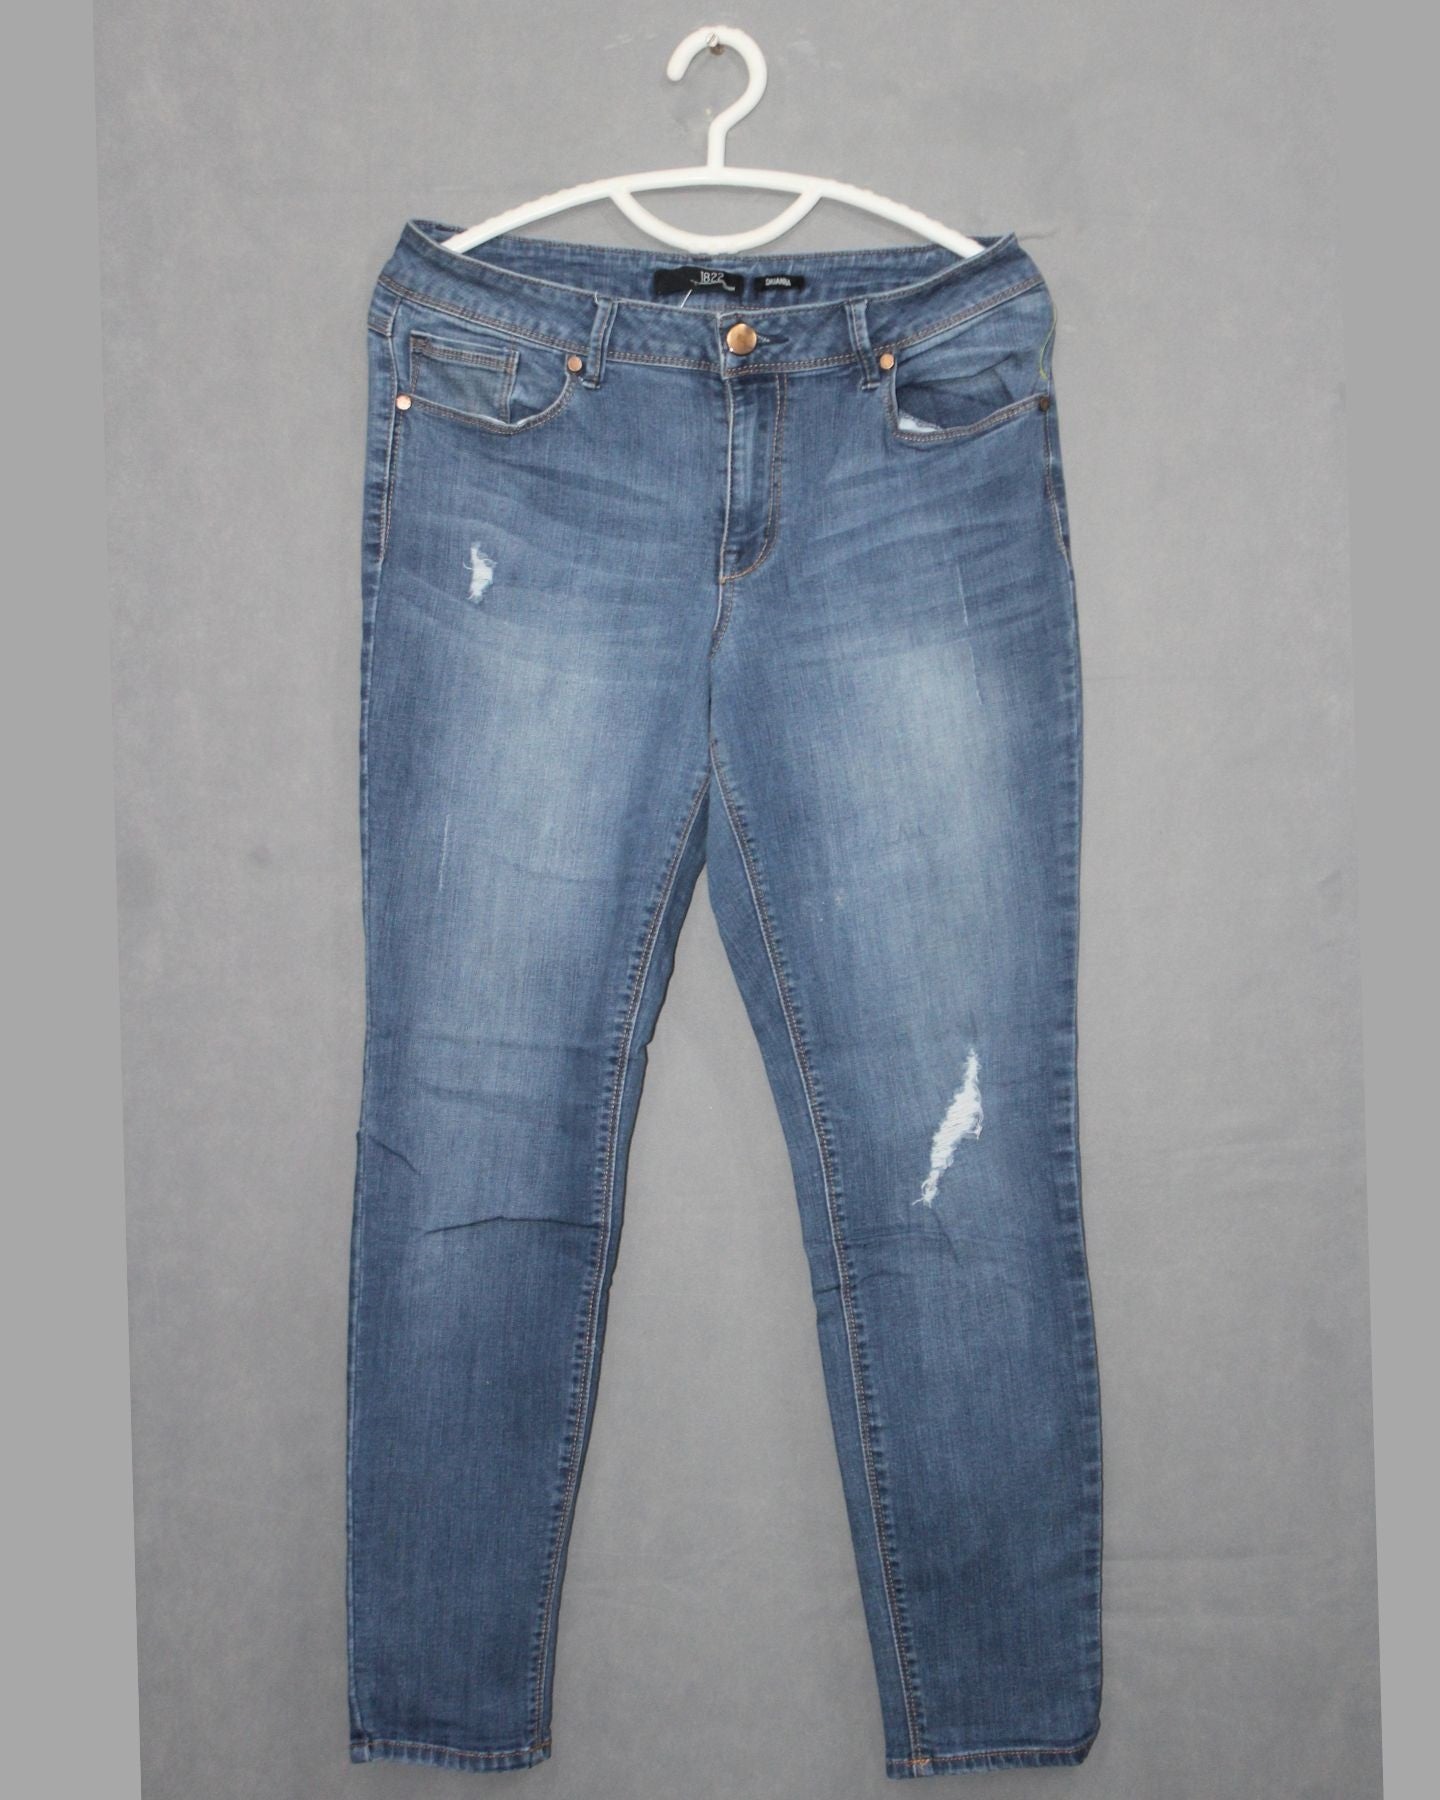 Adrianna Branded Original Denim Jeans For Women Pant